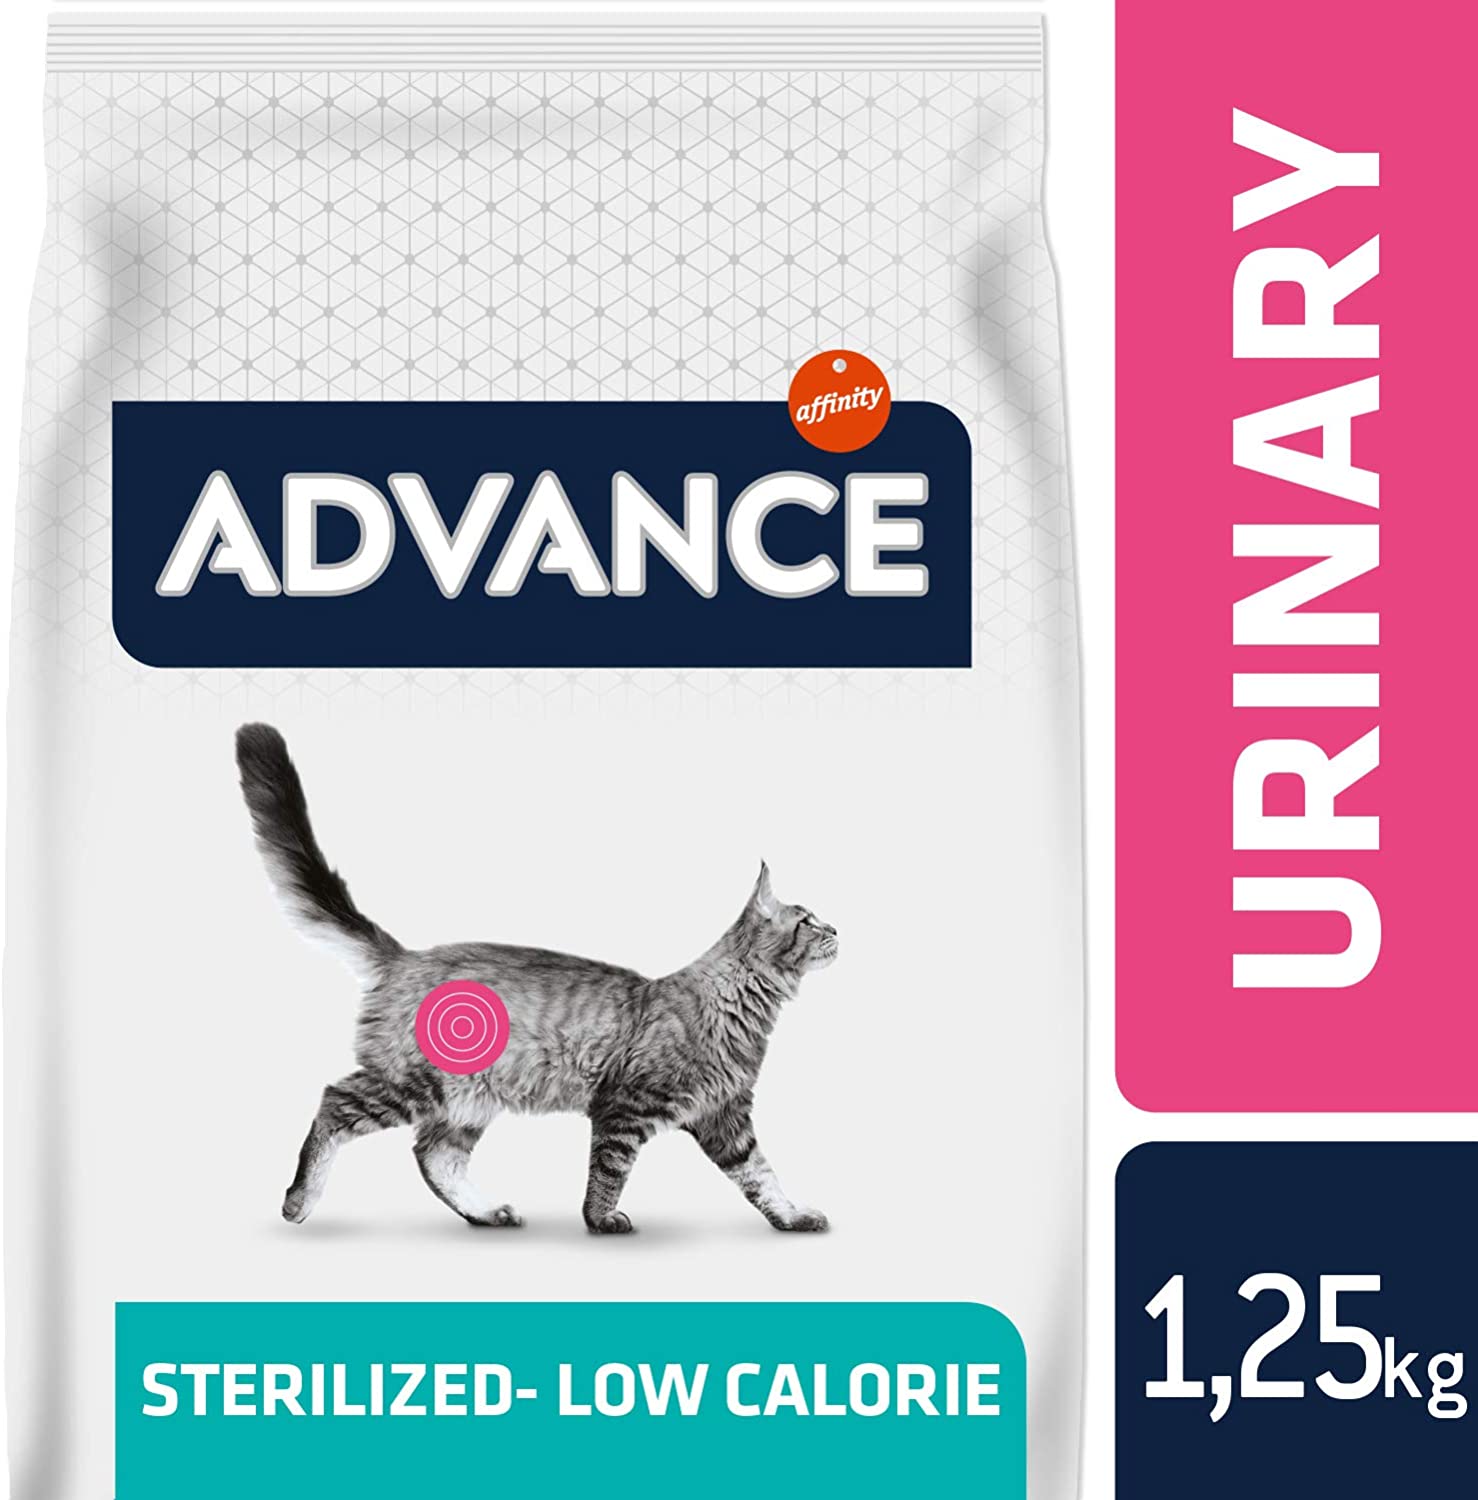  Advance Veterinary Diets Urinary Low Calorie - Pienso para Gatos, 1.25 kg 